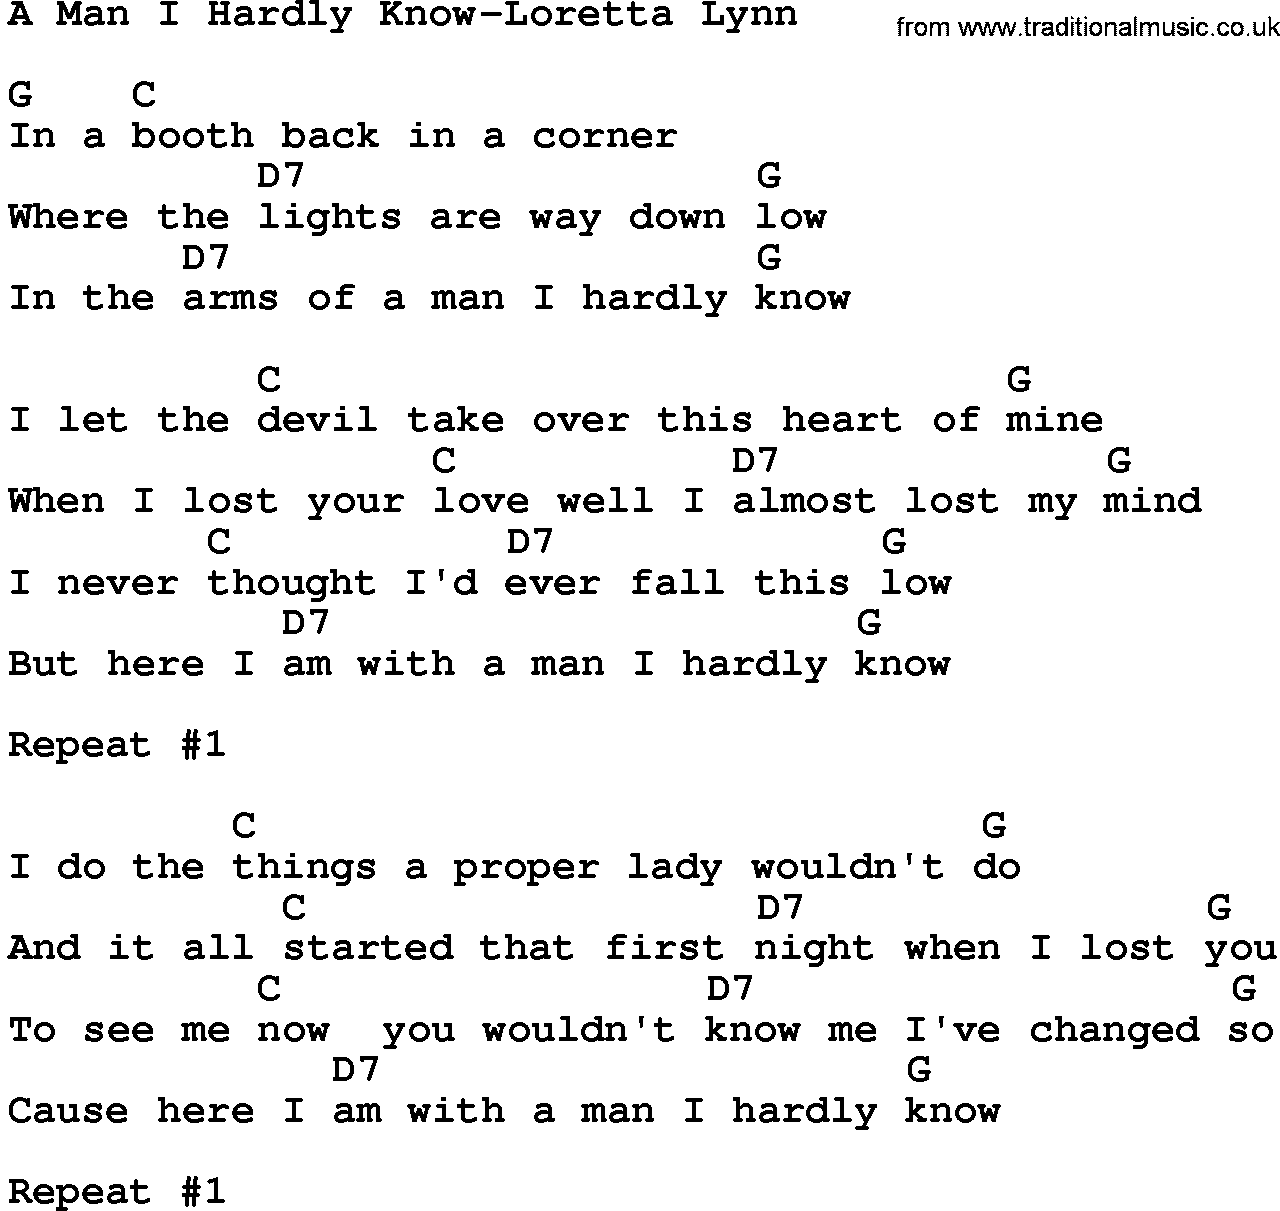 Country music song: A Man I Hardly Know-Loretta Lynn lyrics and chords